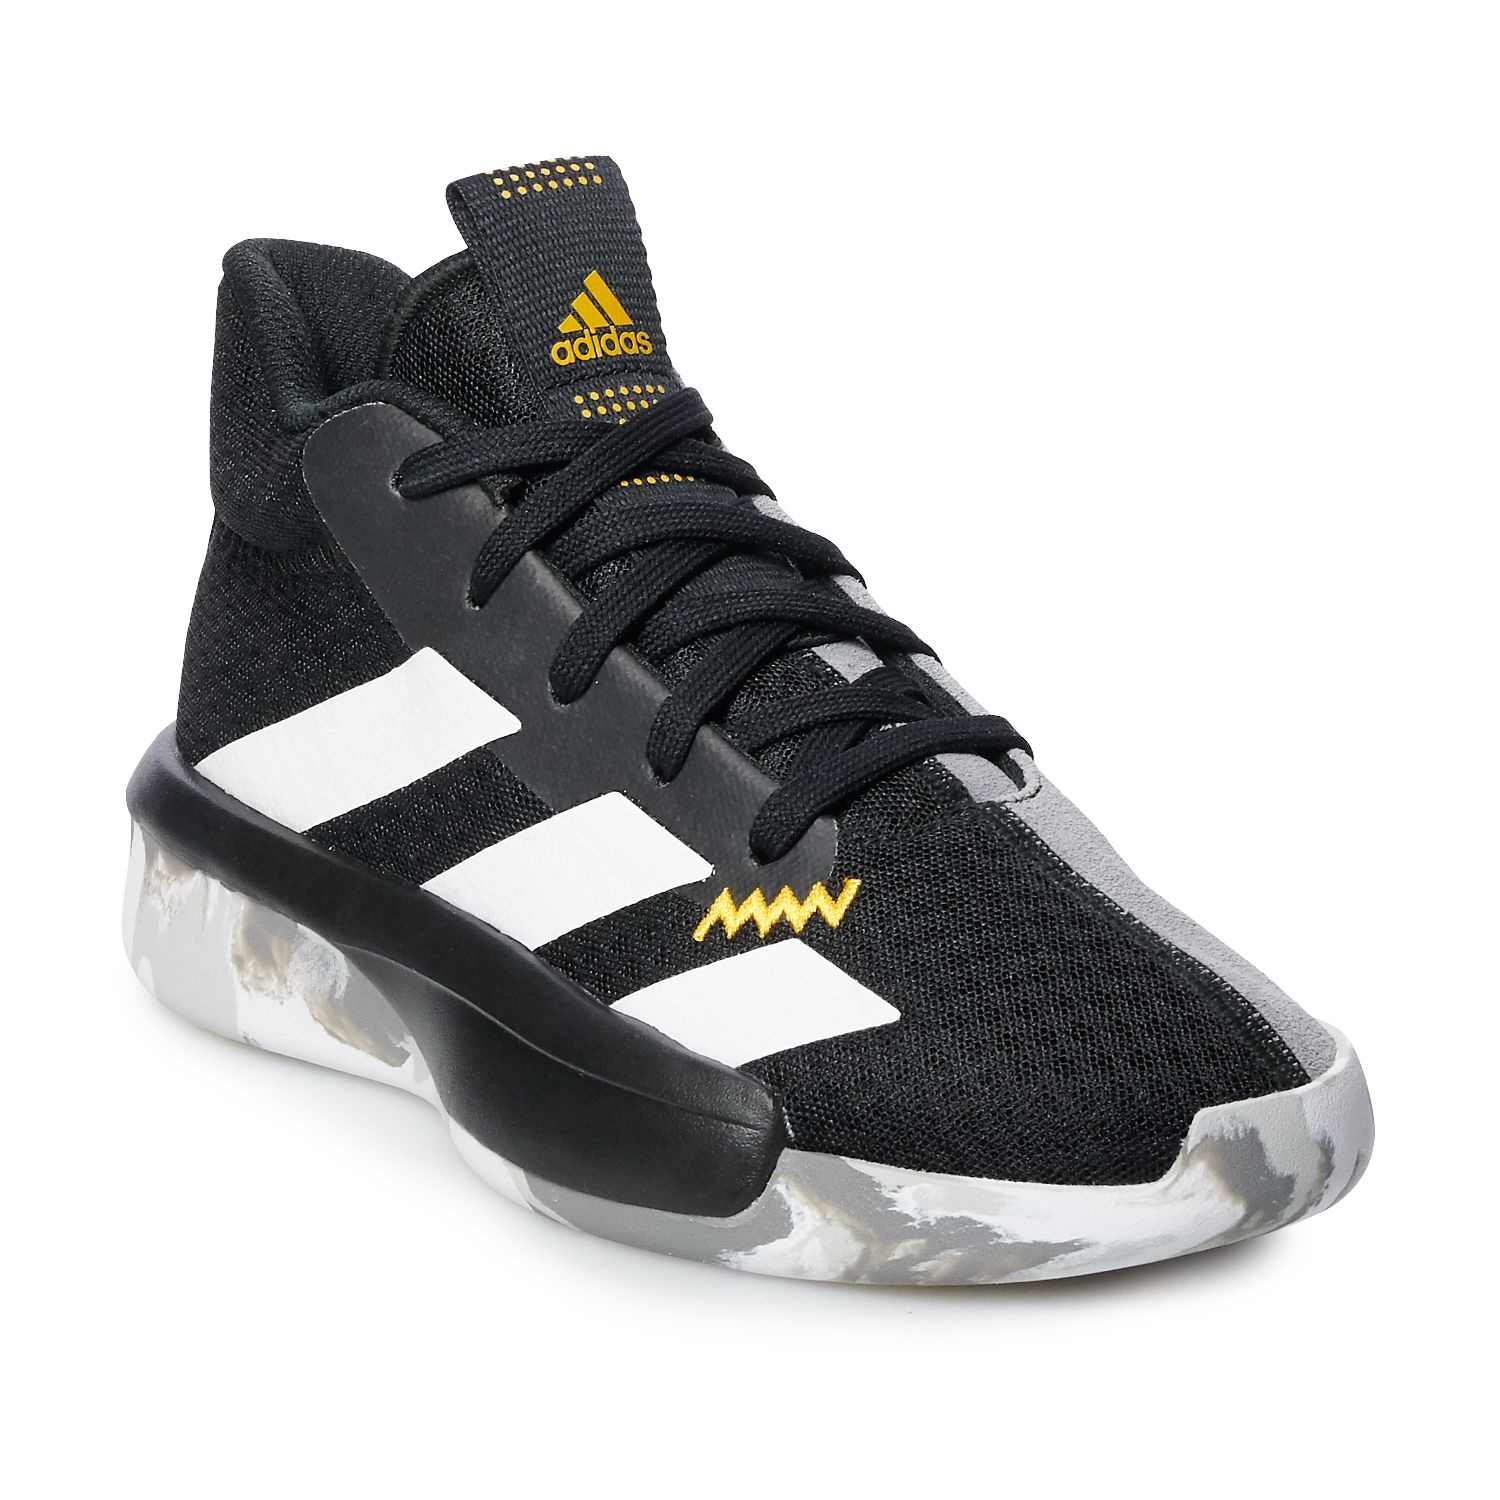 adidas Pro Next Boys' Basketball Shoes